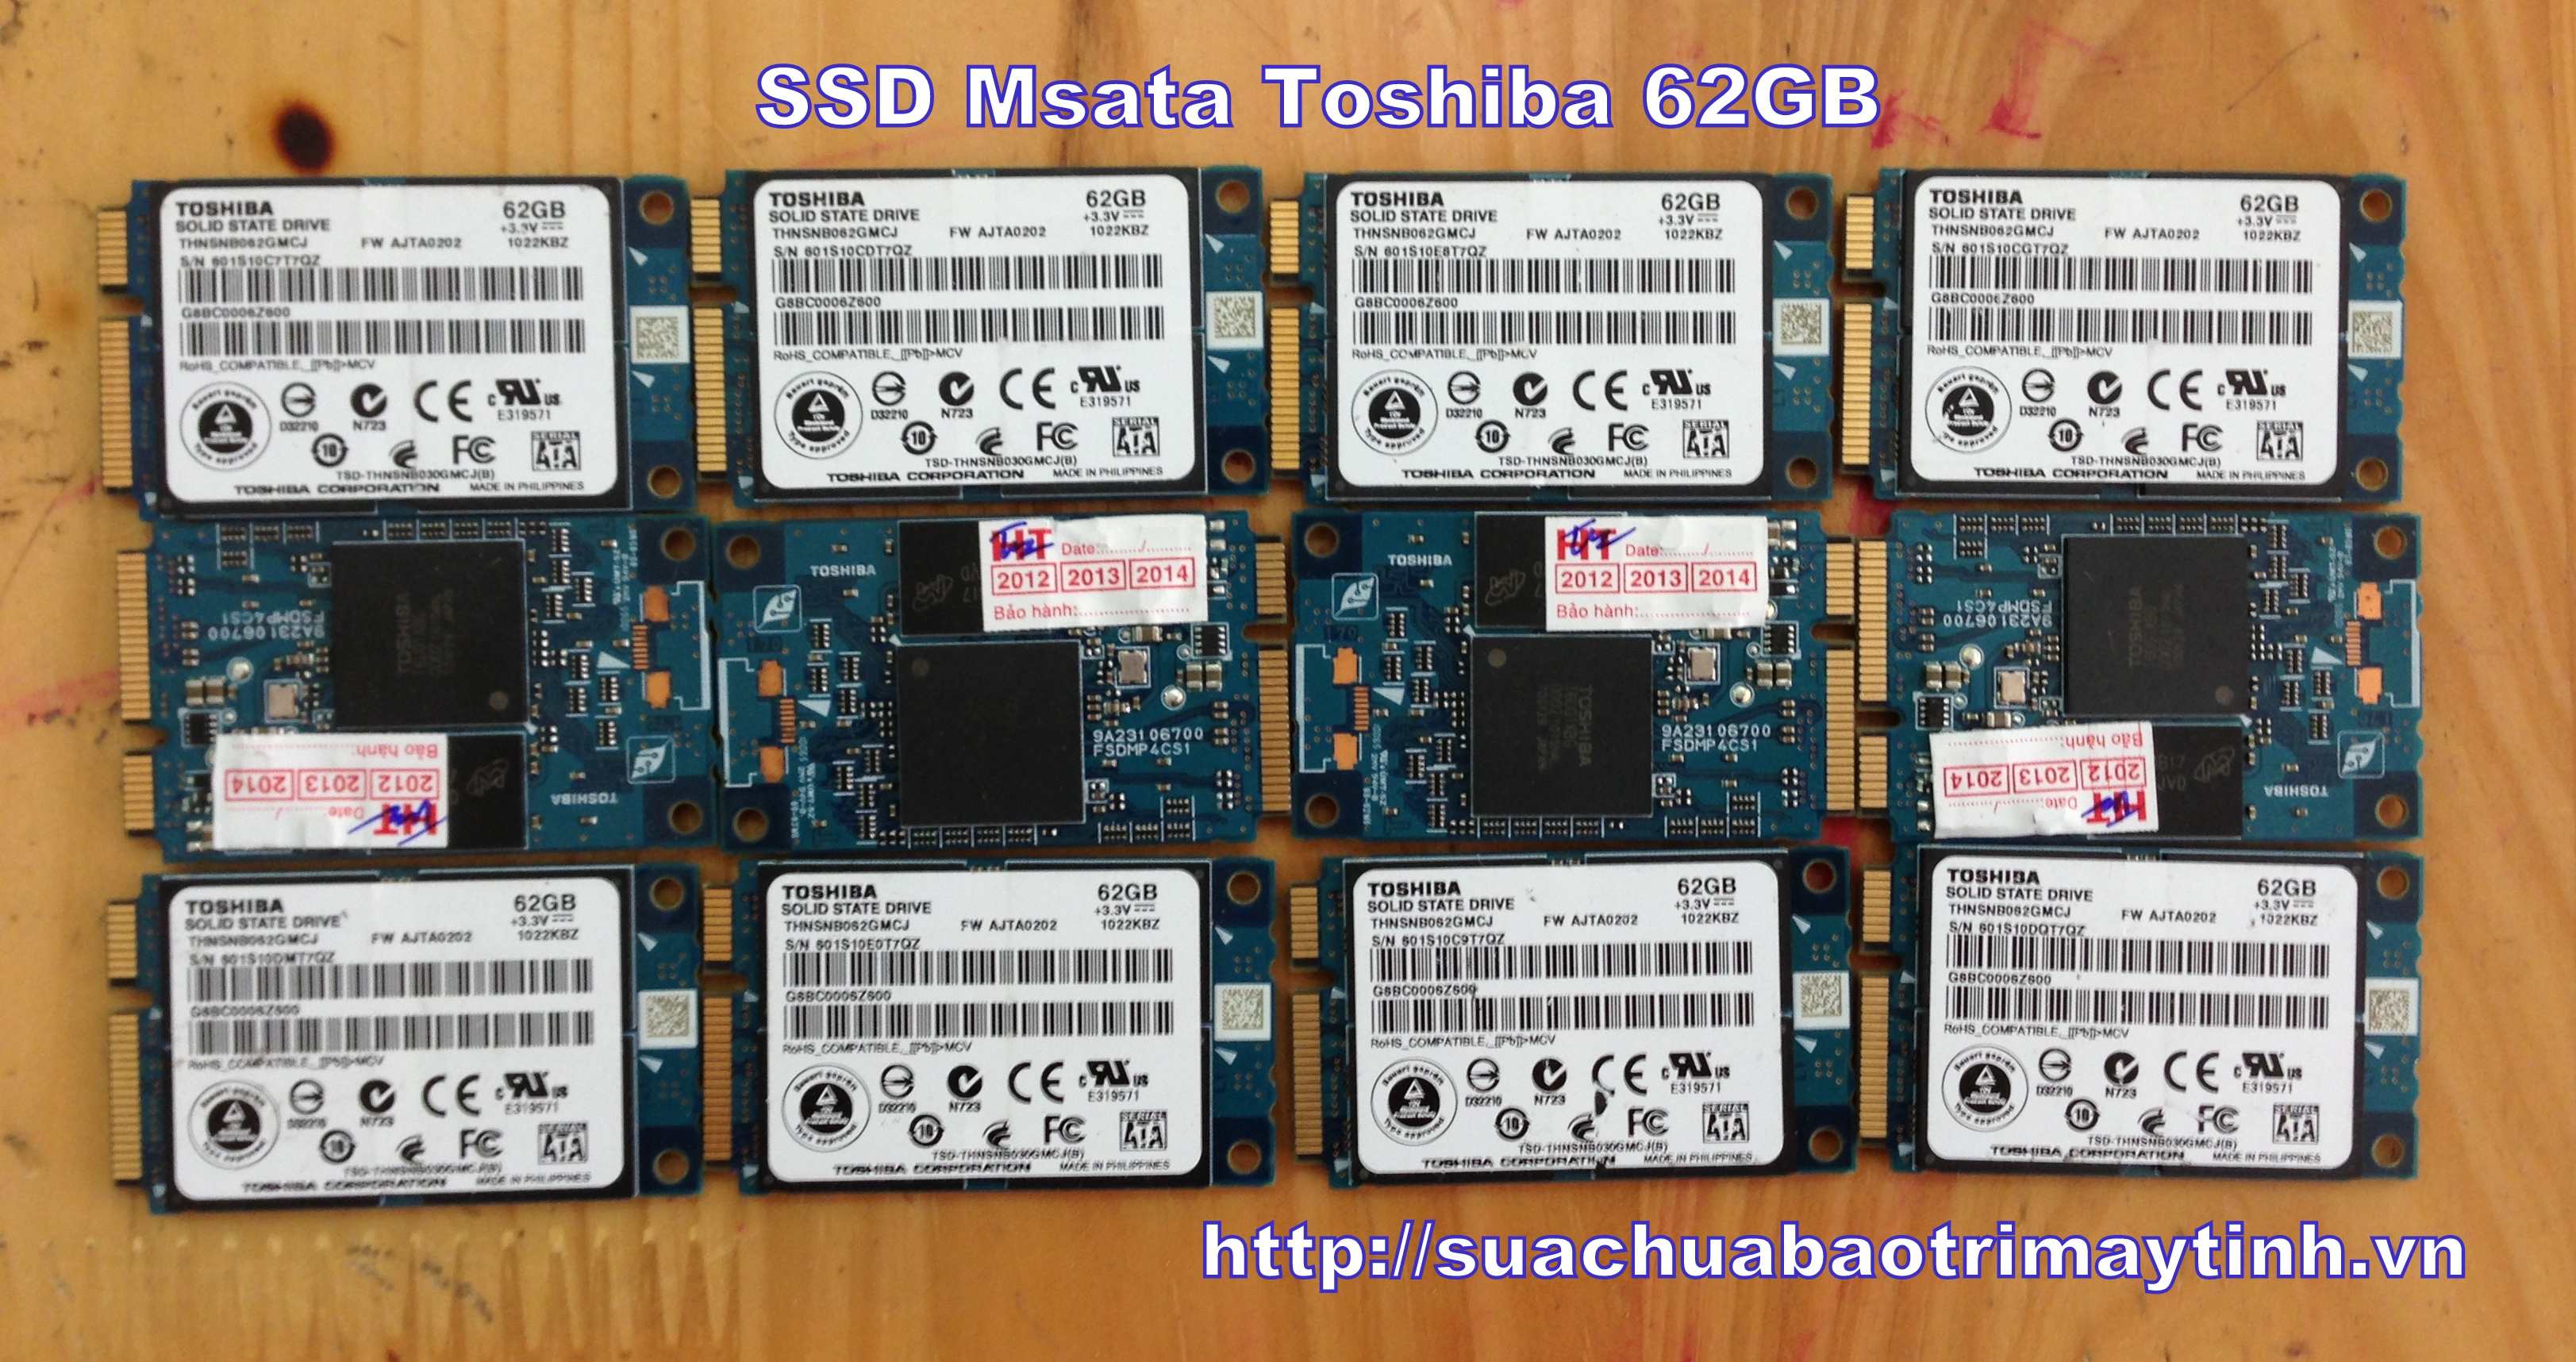 SSD Msata 62GB Toshiba.JPG